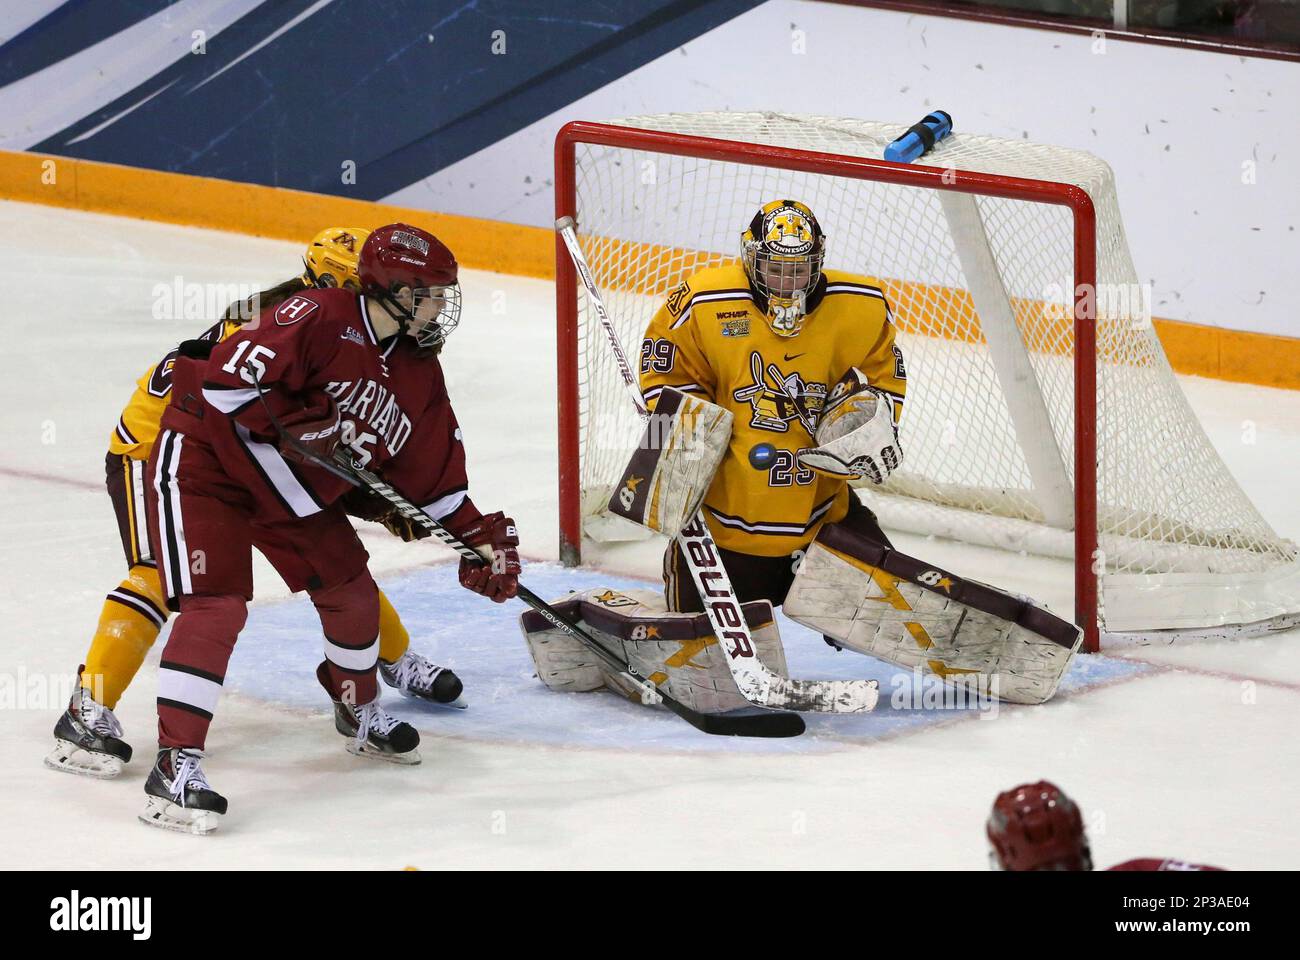 TEMPE, AZ - MARCH 26: Minnesota Whitecaps goalie Amanda Leveille